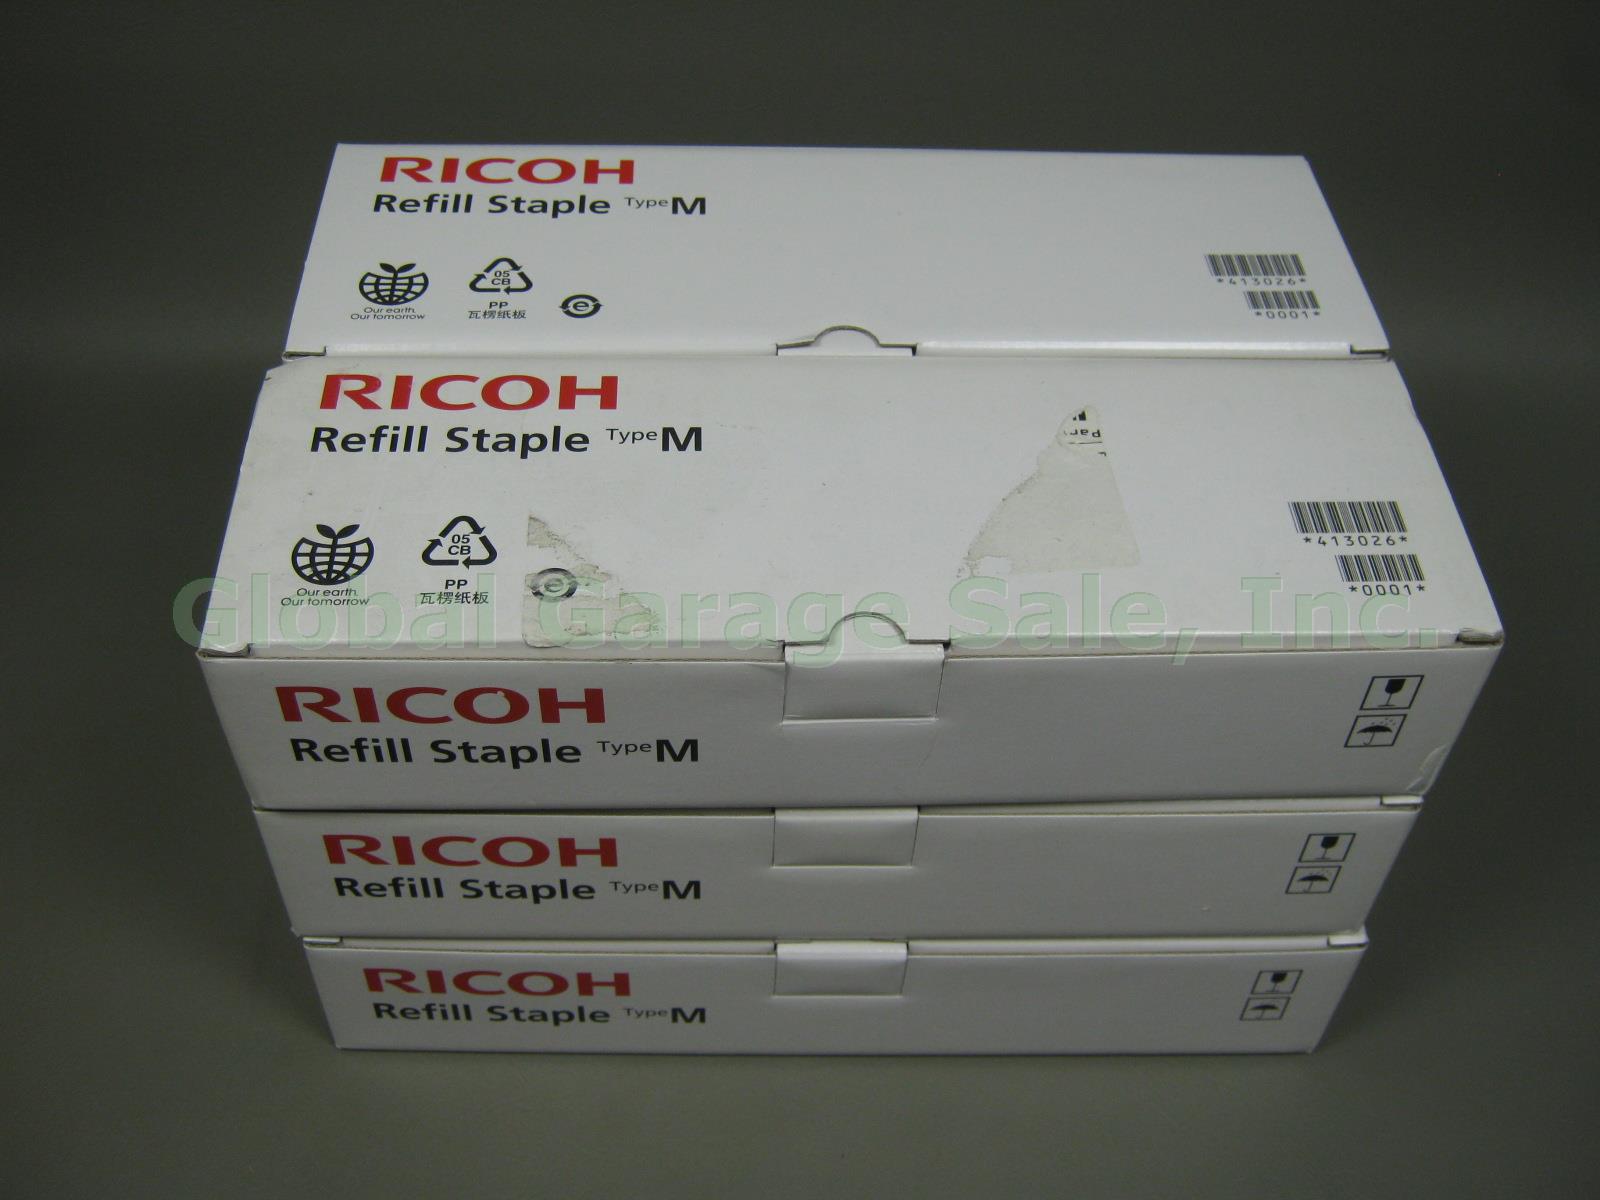 Full Case Ricoh Refill Staple Type M 413026 1201-AM 6 Boxes 30 Cartridges Lot NR 1